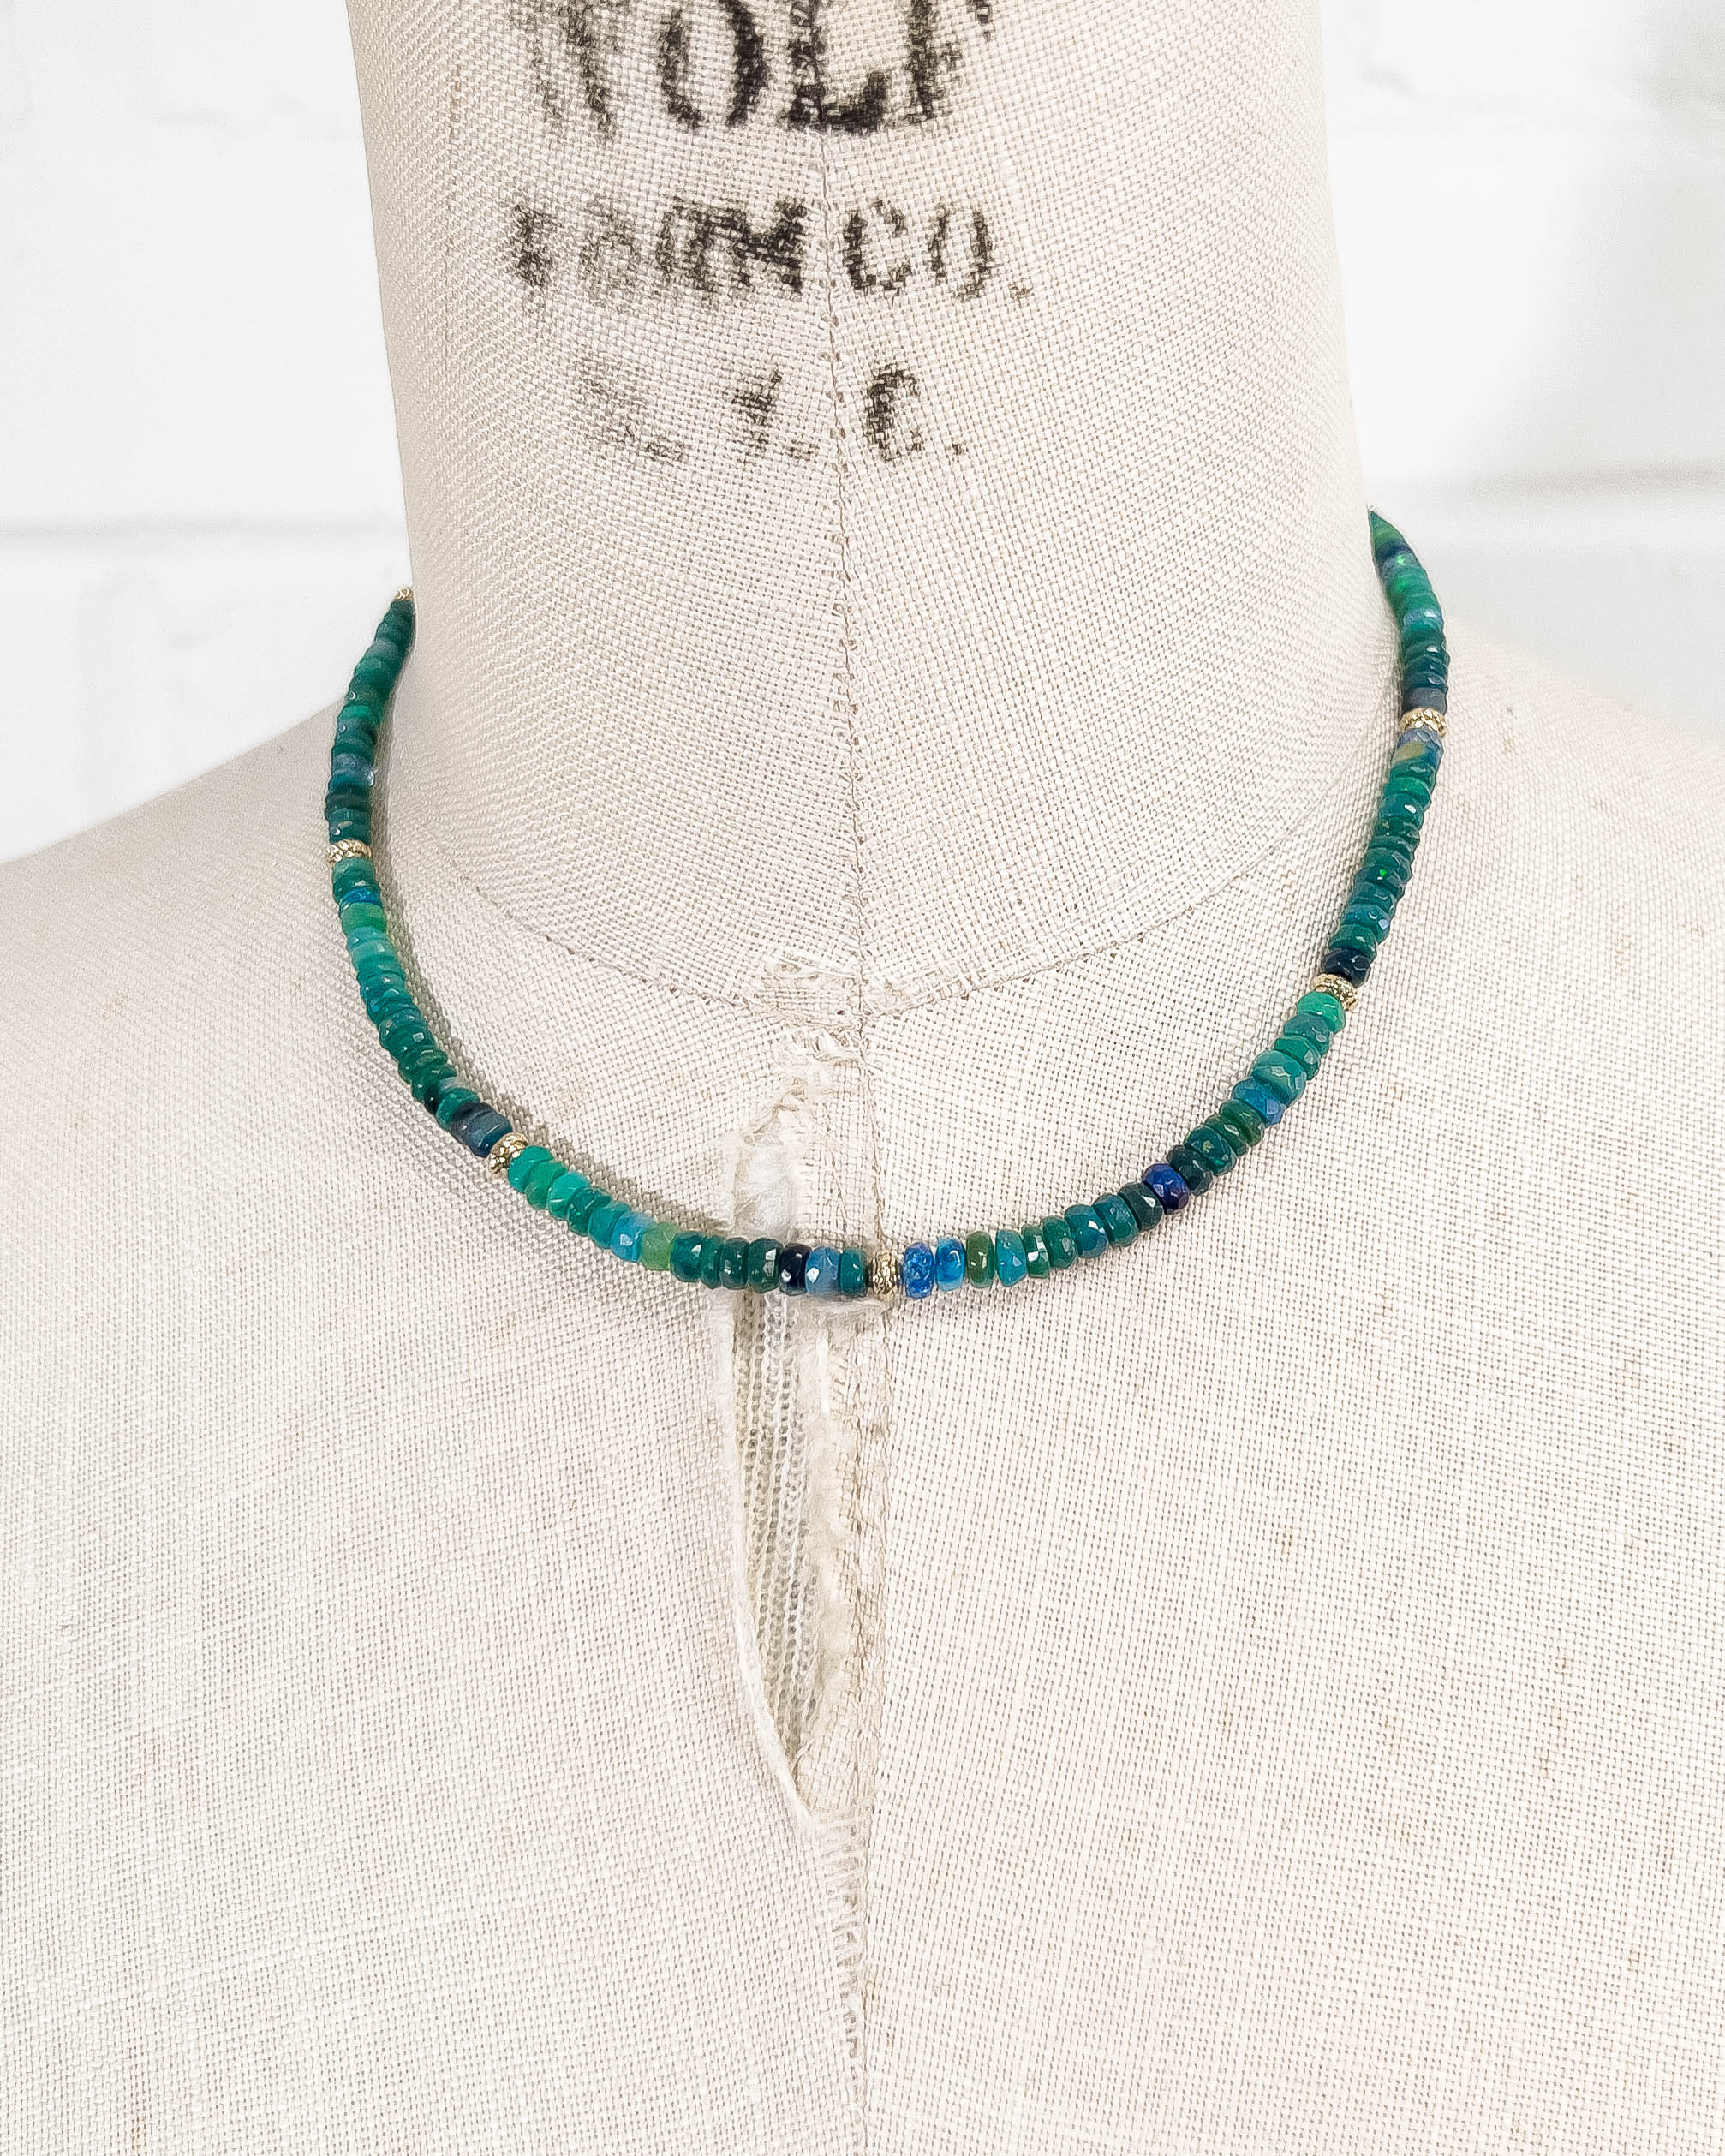 Blue-Green Ethiopian Opal Necklace